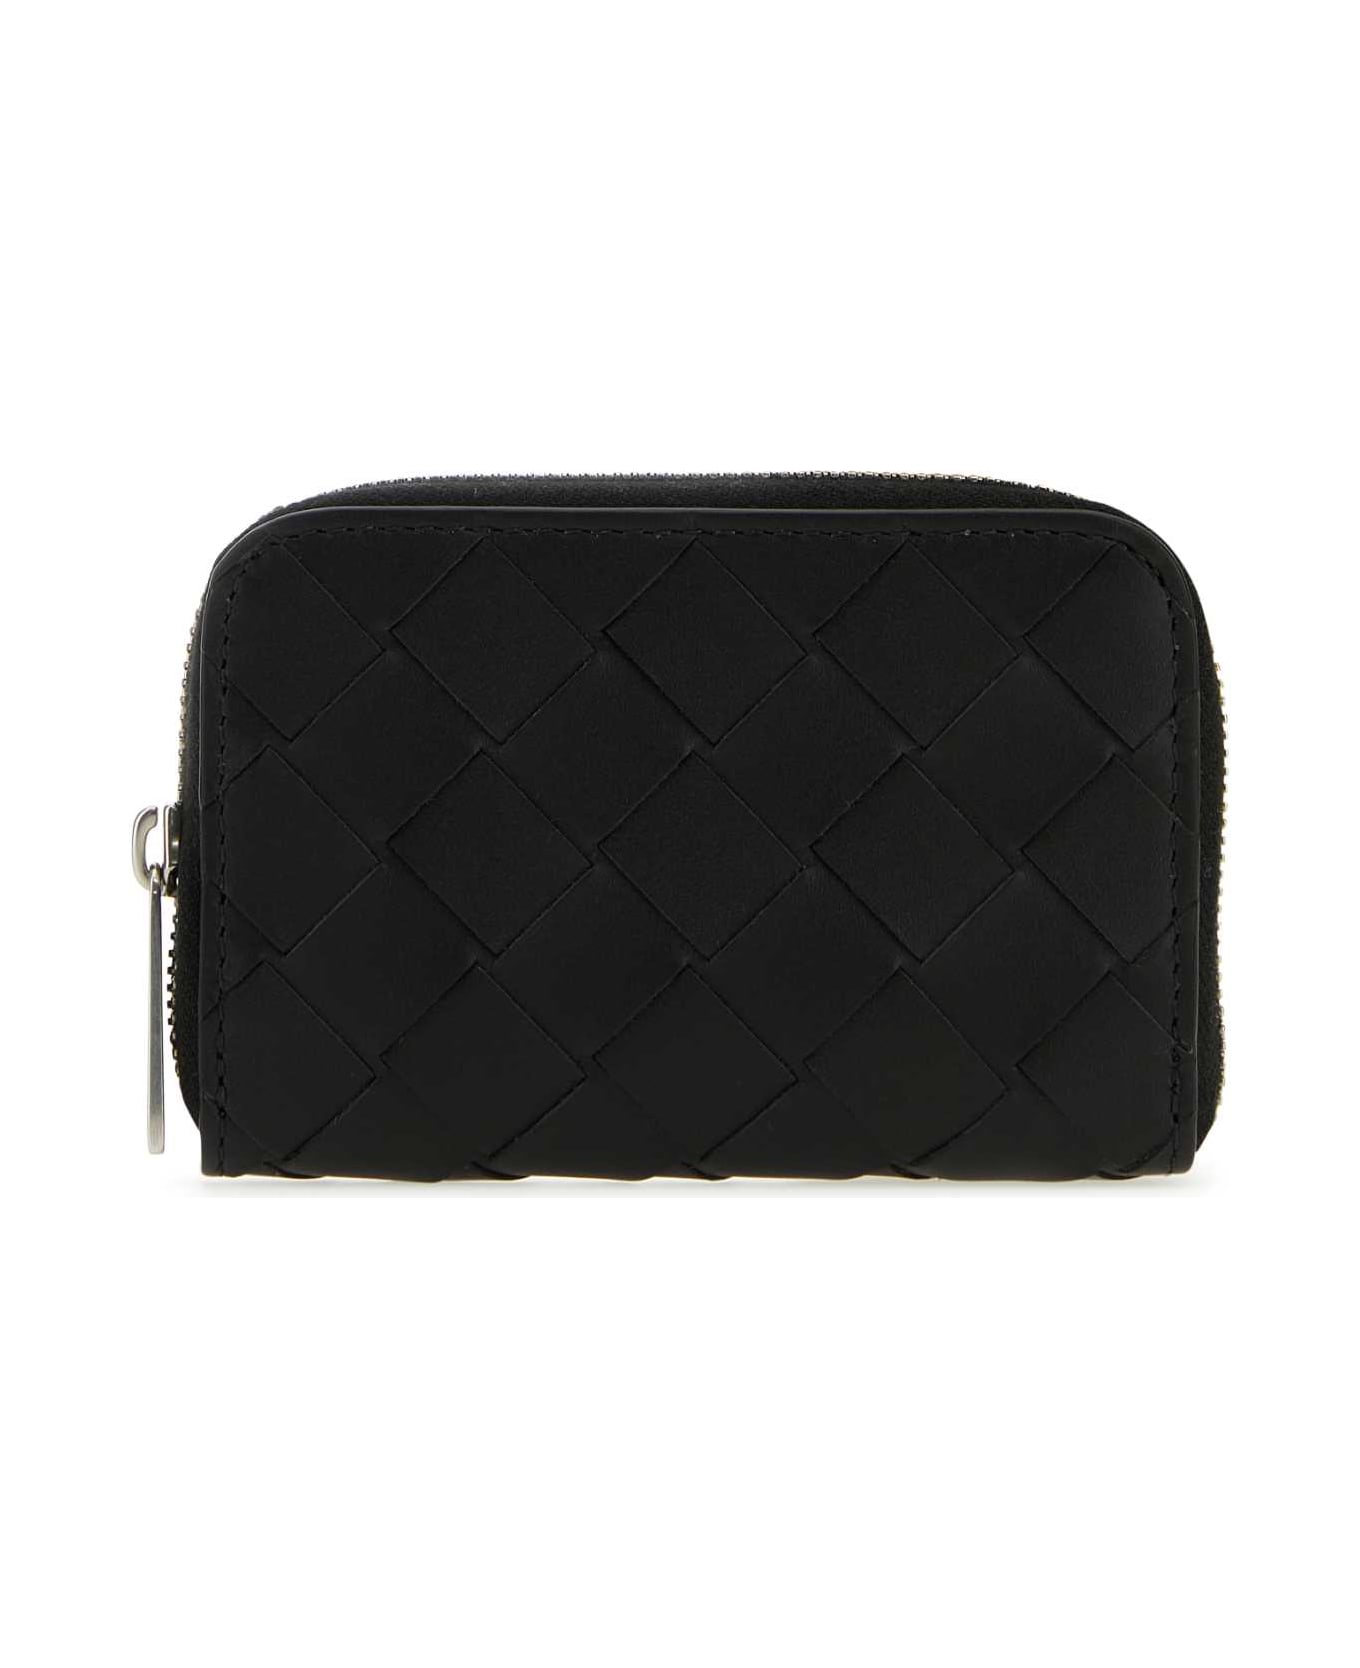 Bottega Veneta Black Leather Wallet - BLACKSILVER 財布